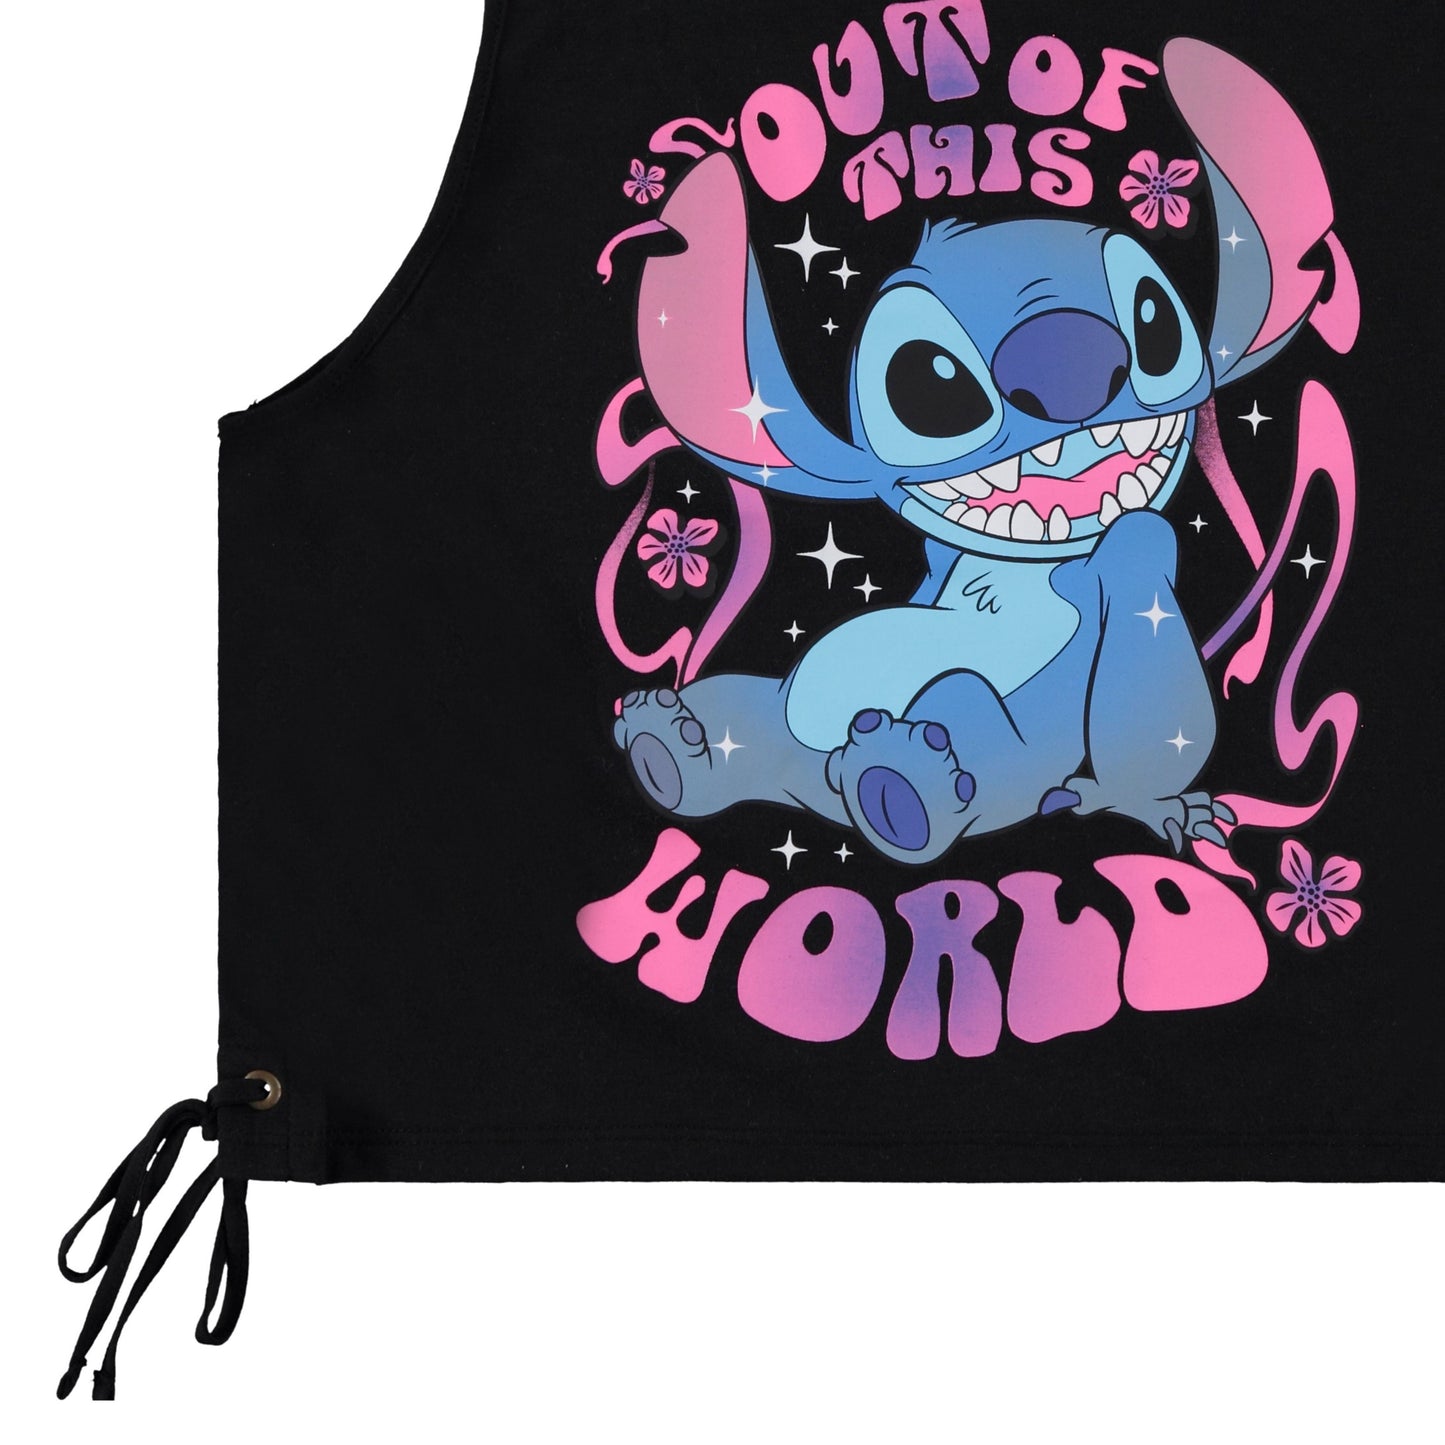 Disney Junior Girls Lilo and Stitch Crop Top Tank T-Shirt with Side Tie- Junior Girls Sizes XS-3XL